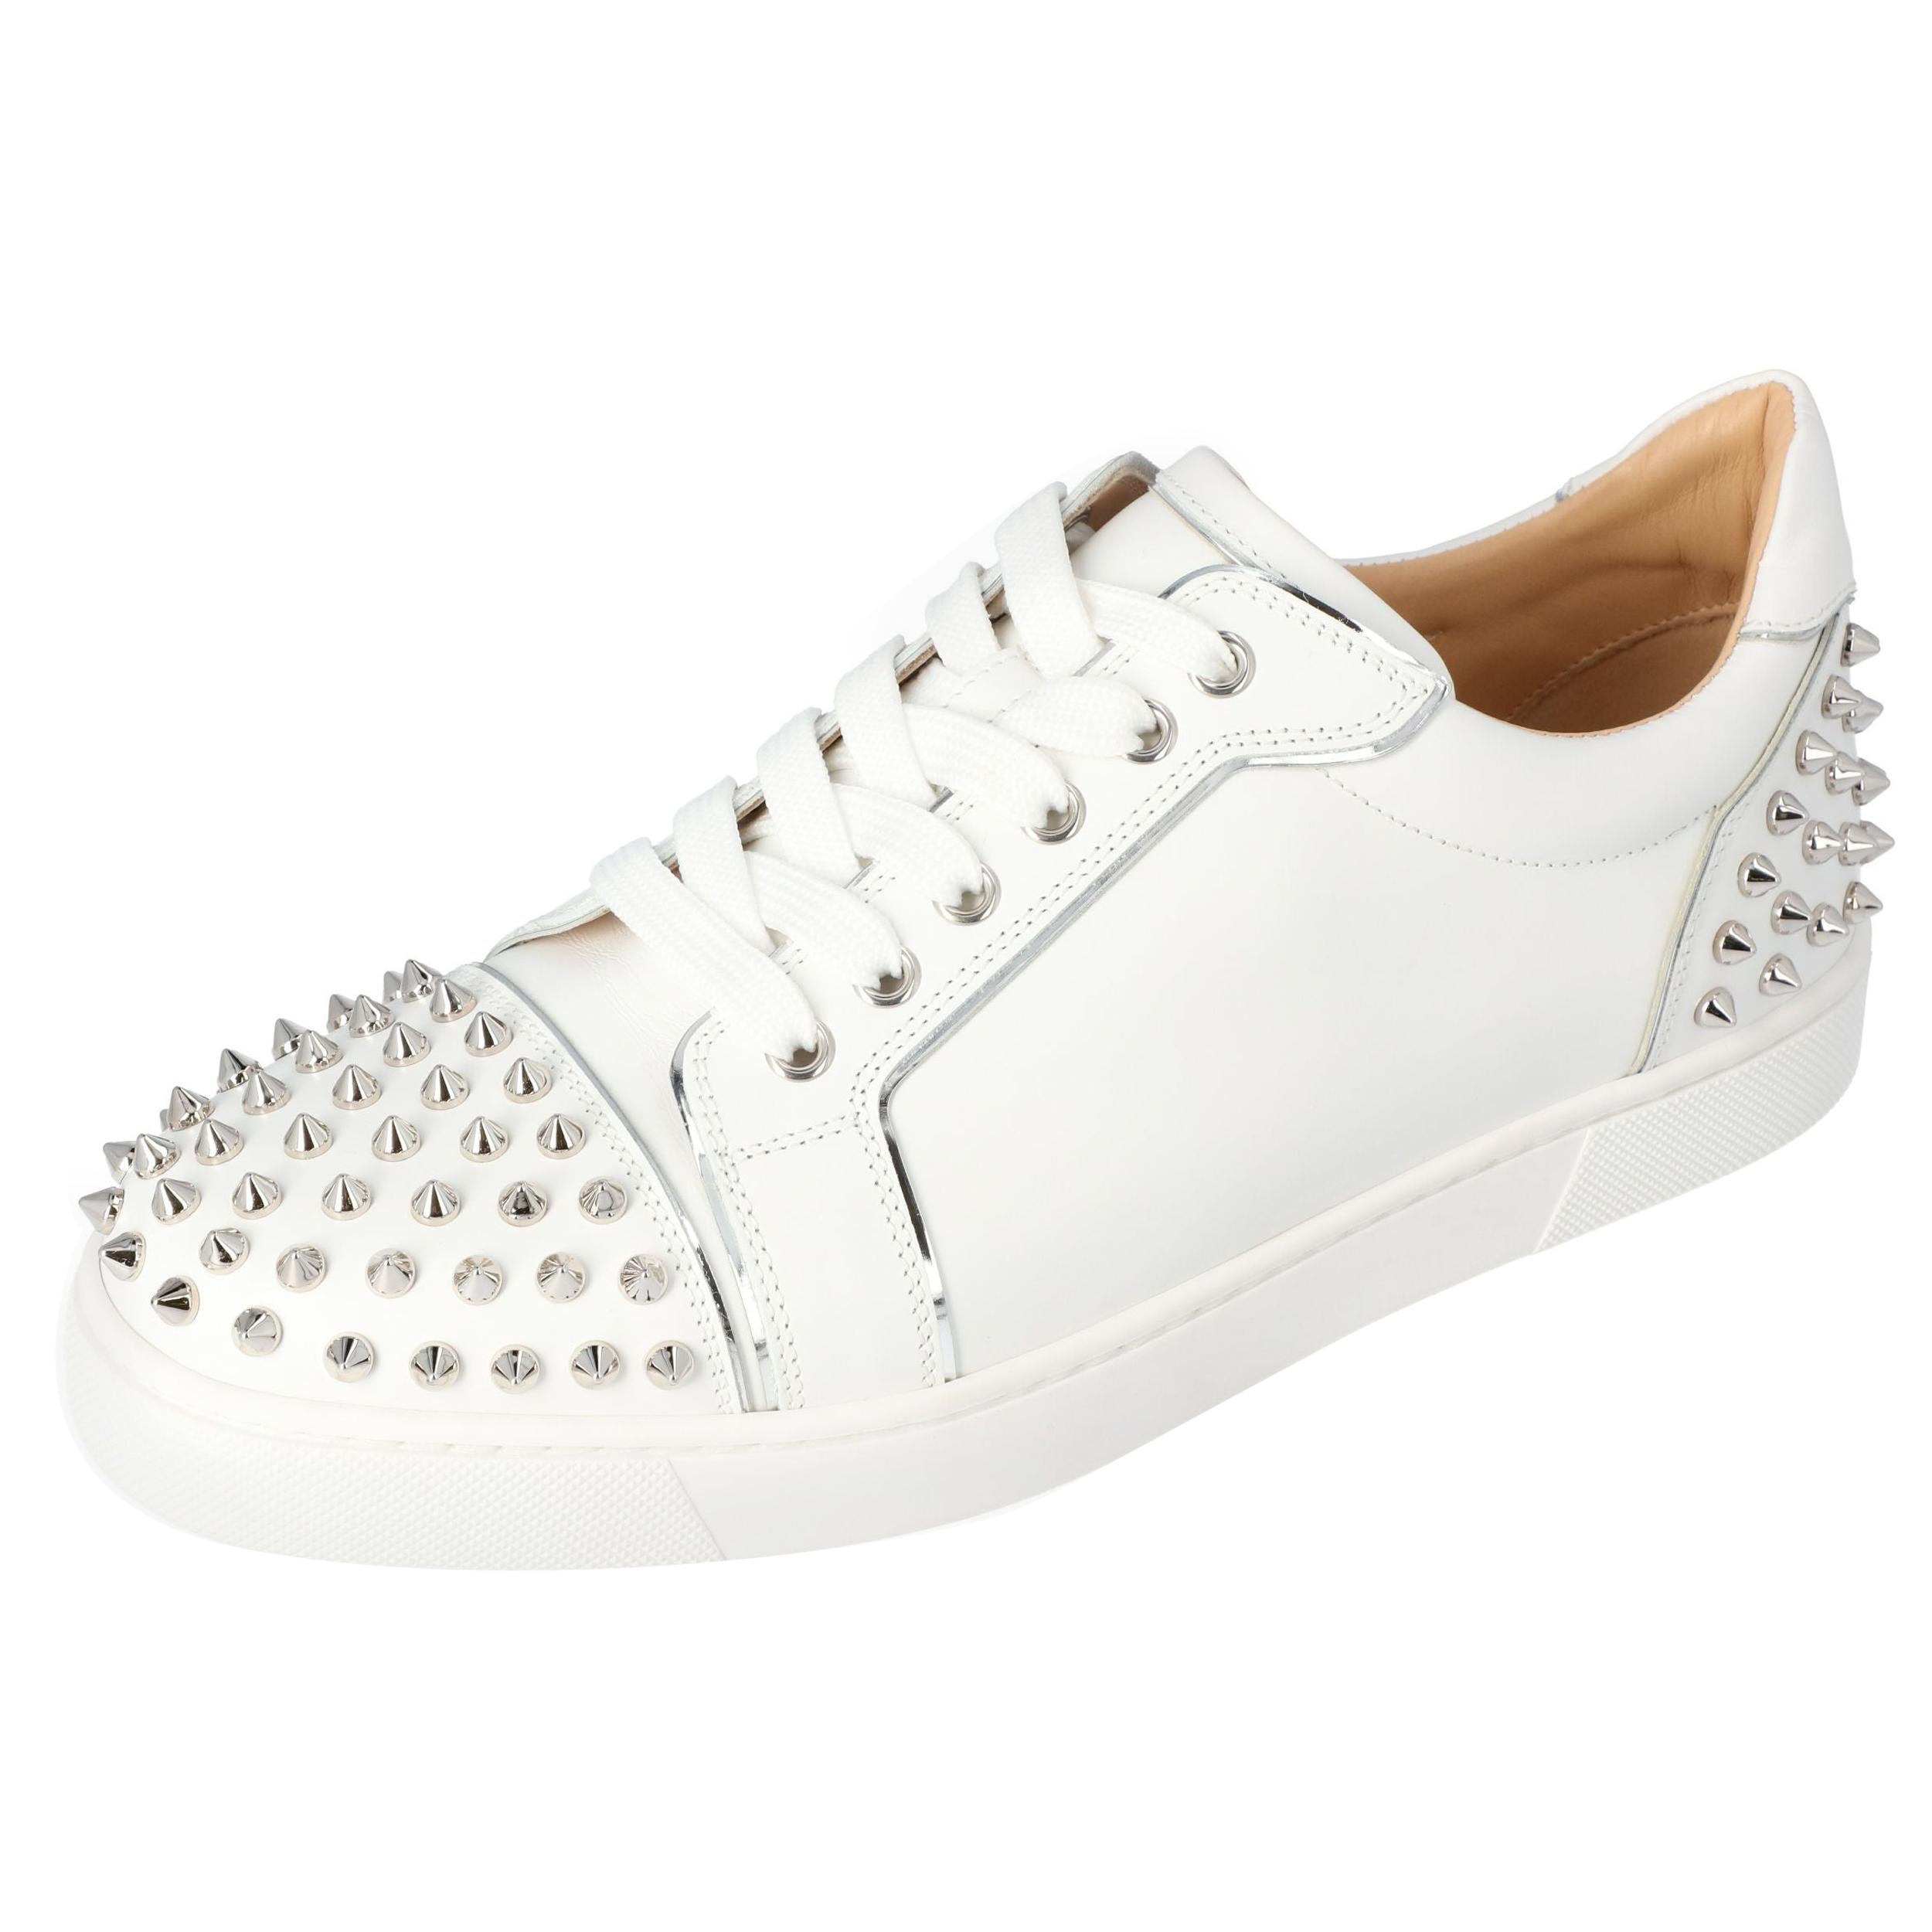 Christian Louboutin White Leather Vierissima Spikes Sneakers Size 39